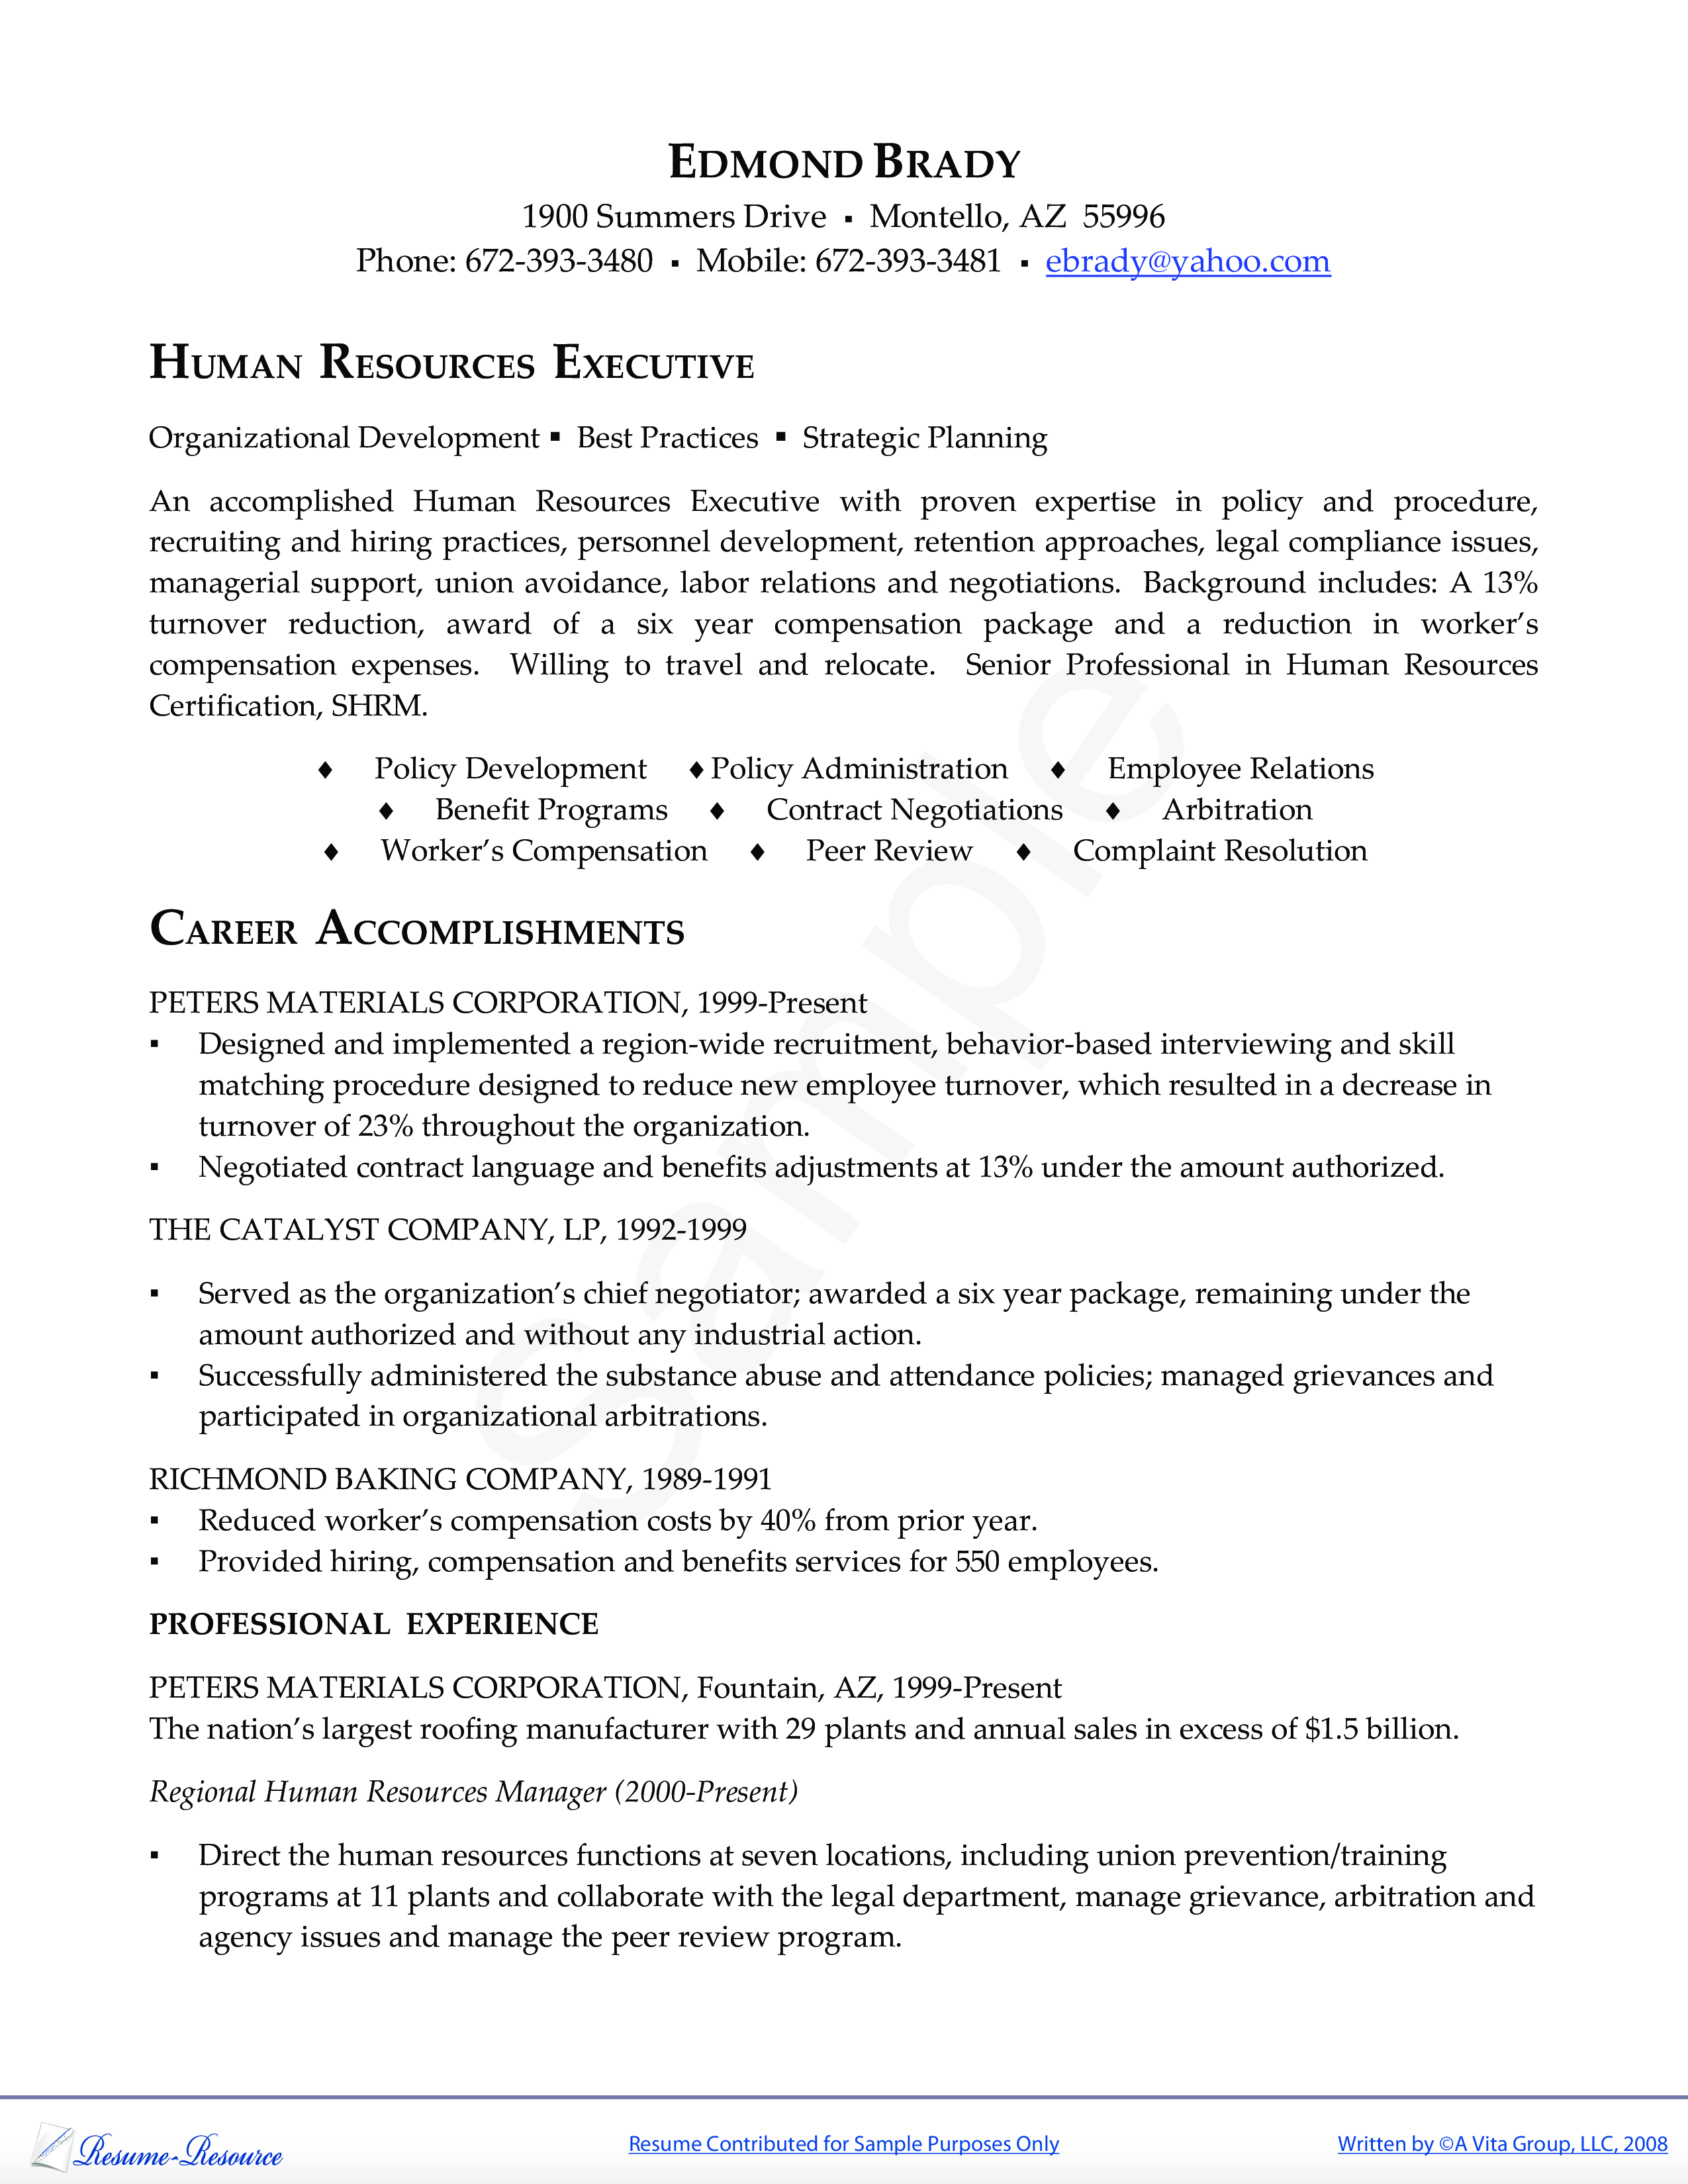 Human Resources Executive Resume main image